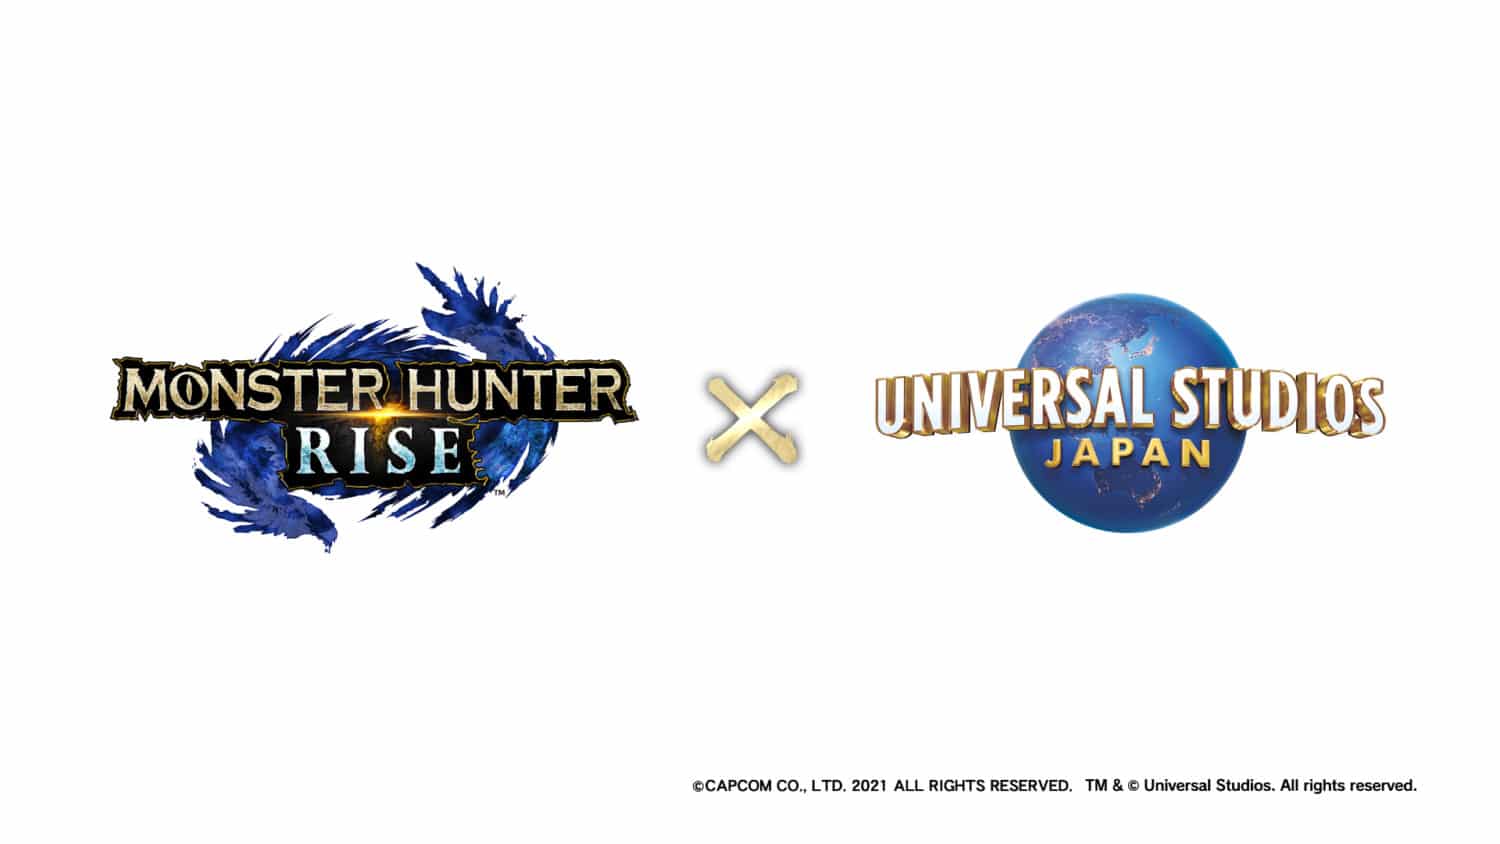 Monster Hunter Rise X Universal Studios Japan samenwerking aangekondigd